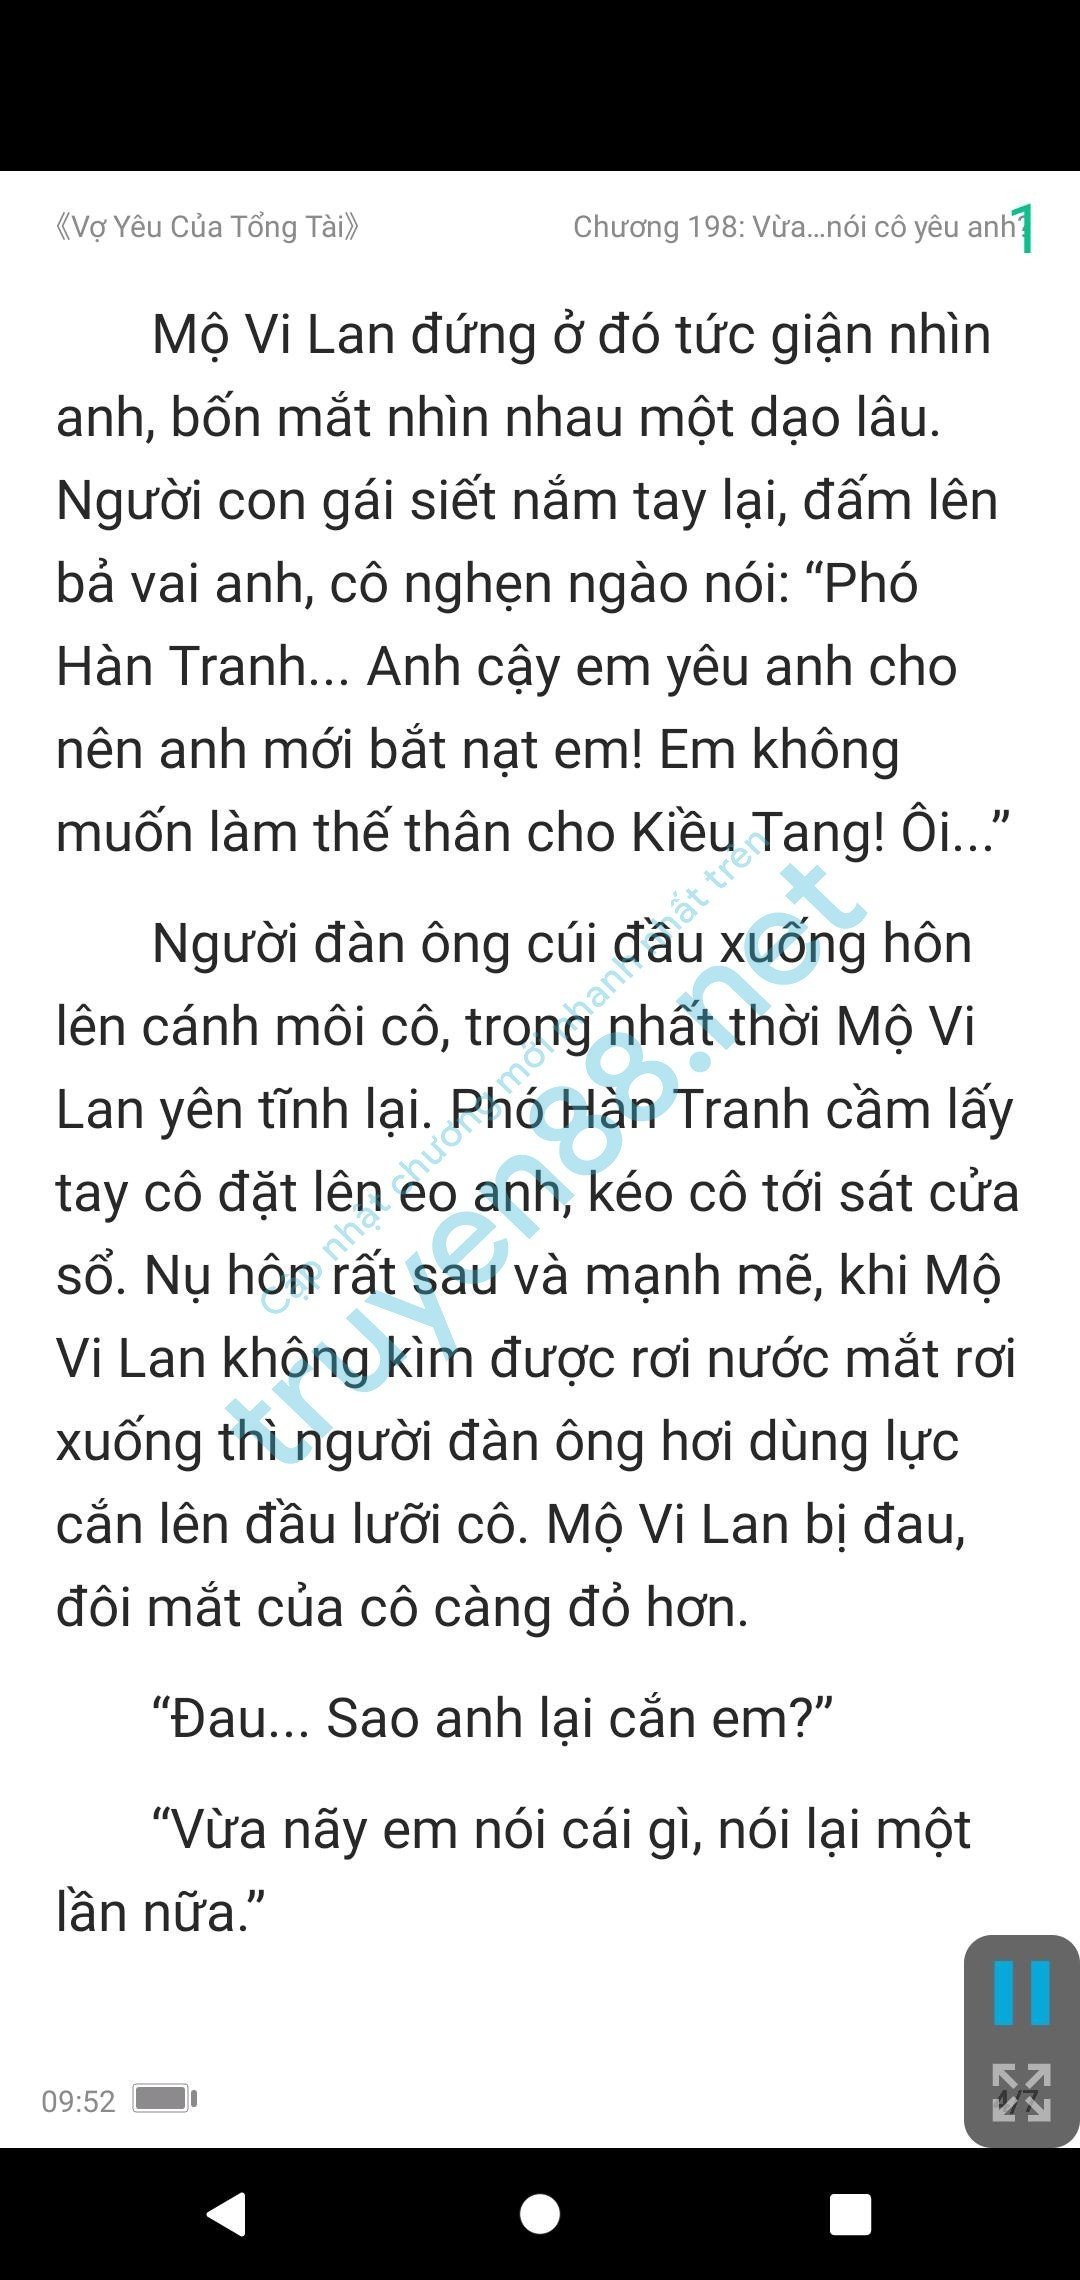 vo-yeu-cua-tong-tai-mo-vi-lan--pho-han-tranh-198-0